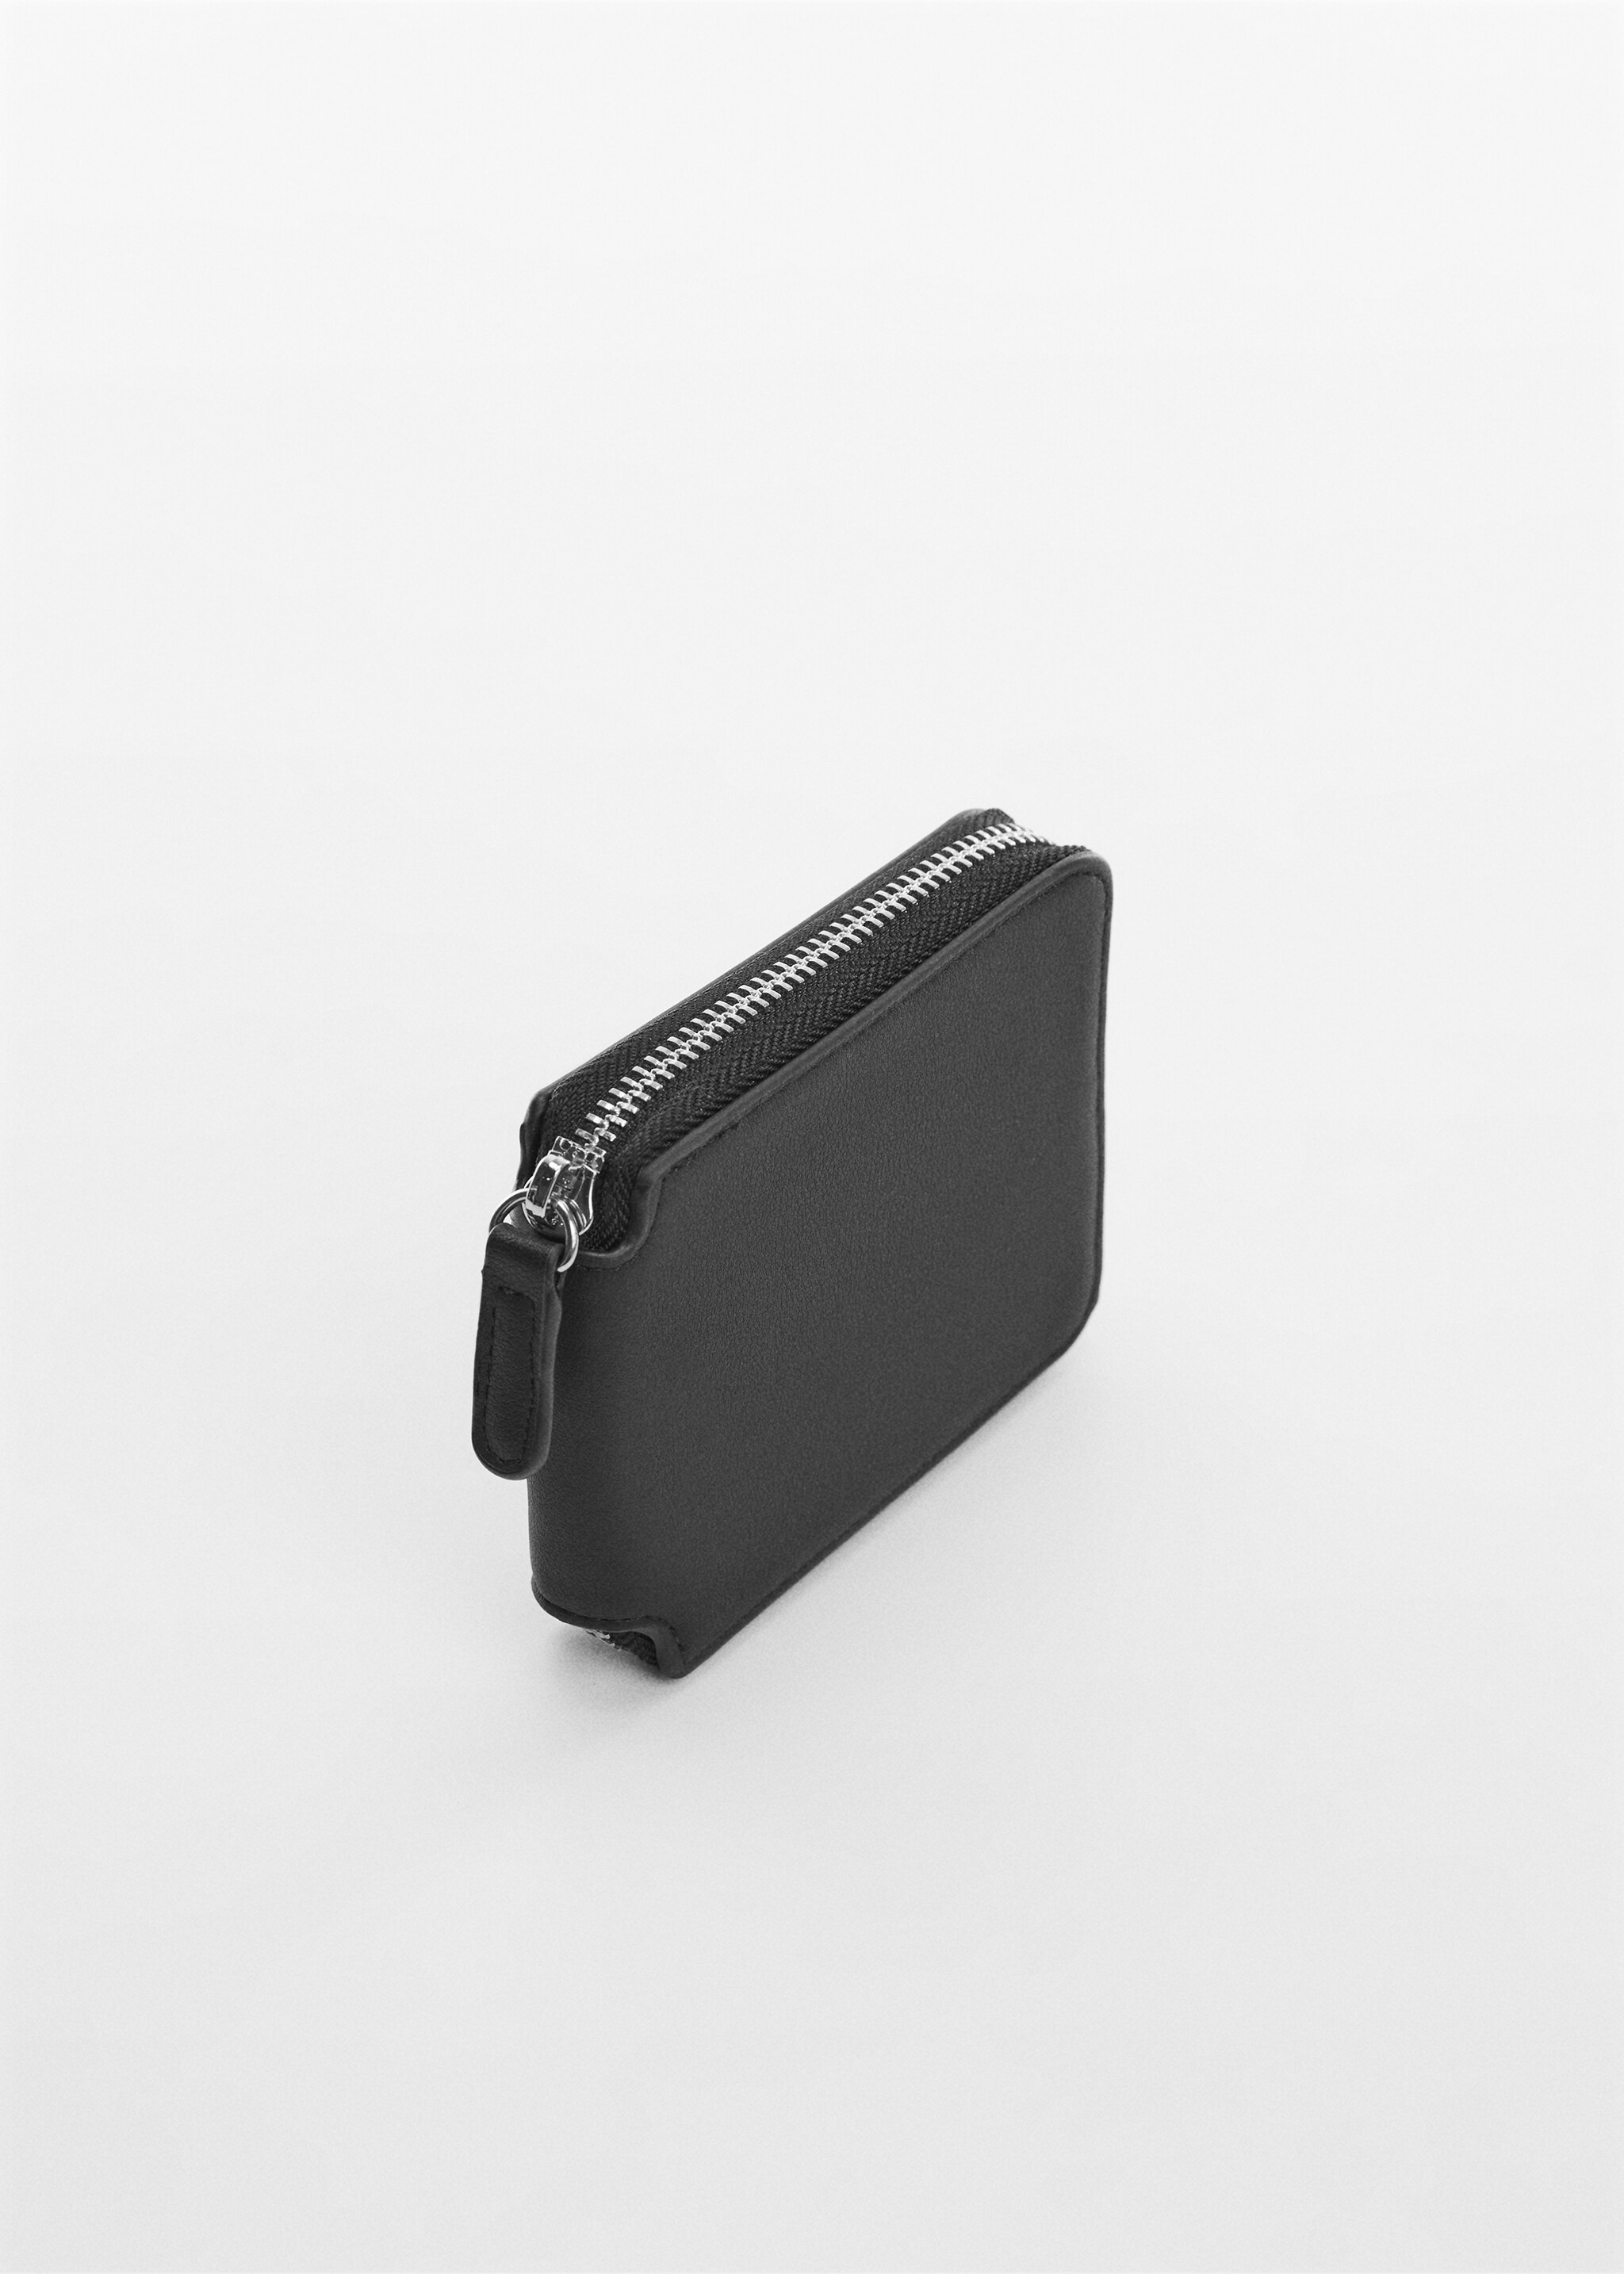 Бумажник-холдер с RFID-защитой - Средний план